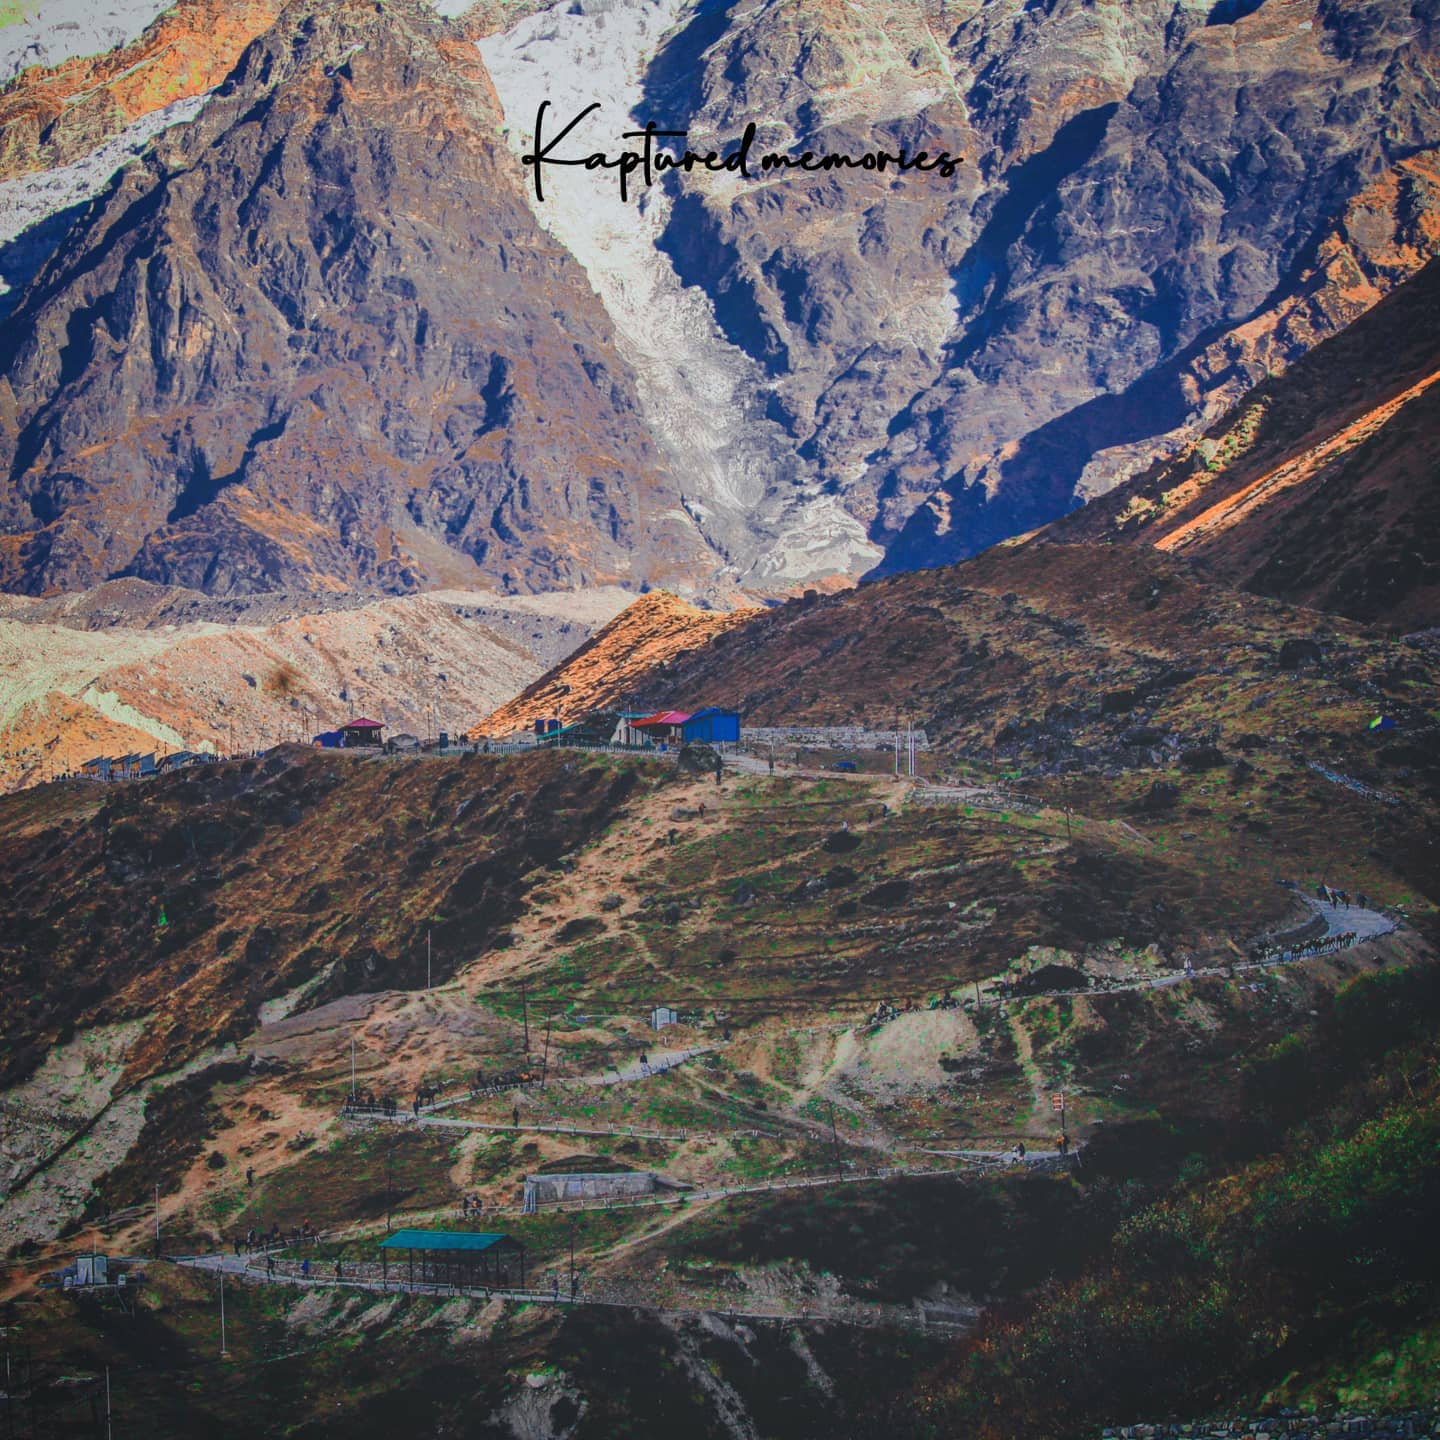 Kedarnath trek ✨🕉️.......
.
.
.
.
. for more shorts and turn on notification bell for latest posts🤗........
.
.
.
.
#shotoncanon #storiesofindia #kedarnathdham #trekking #travelphotography #mountainscape #landscapephotography #basecamp #kedarnath #temple #shutterbugladka #wreck_captured #kedarnathtrek #shivshankar #sunrise #shuttersofindia #delhigram #uttarakhandheaven #uttrakhand_dairies #rural #greenworld #peaceandlove #jaibholenath #jaimahakal #indianphotography #likeforlikes #followforfollowback #photooftheday #photographerlife #delhiphotographer